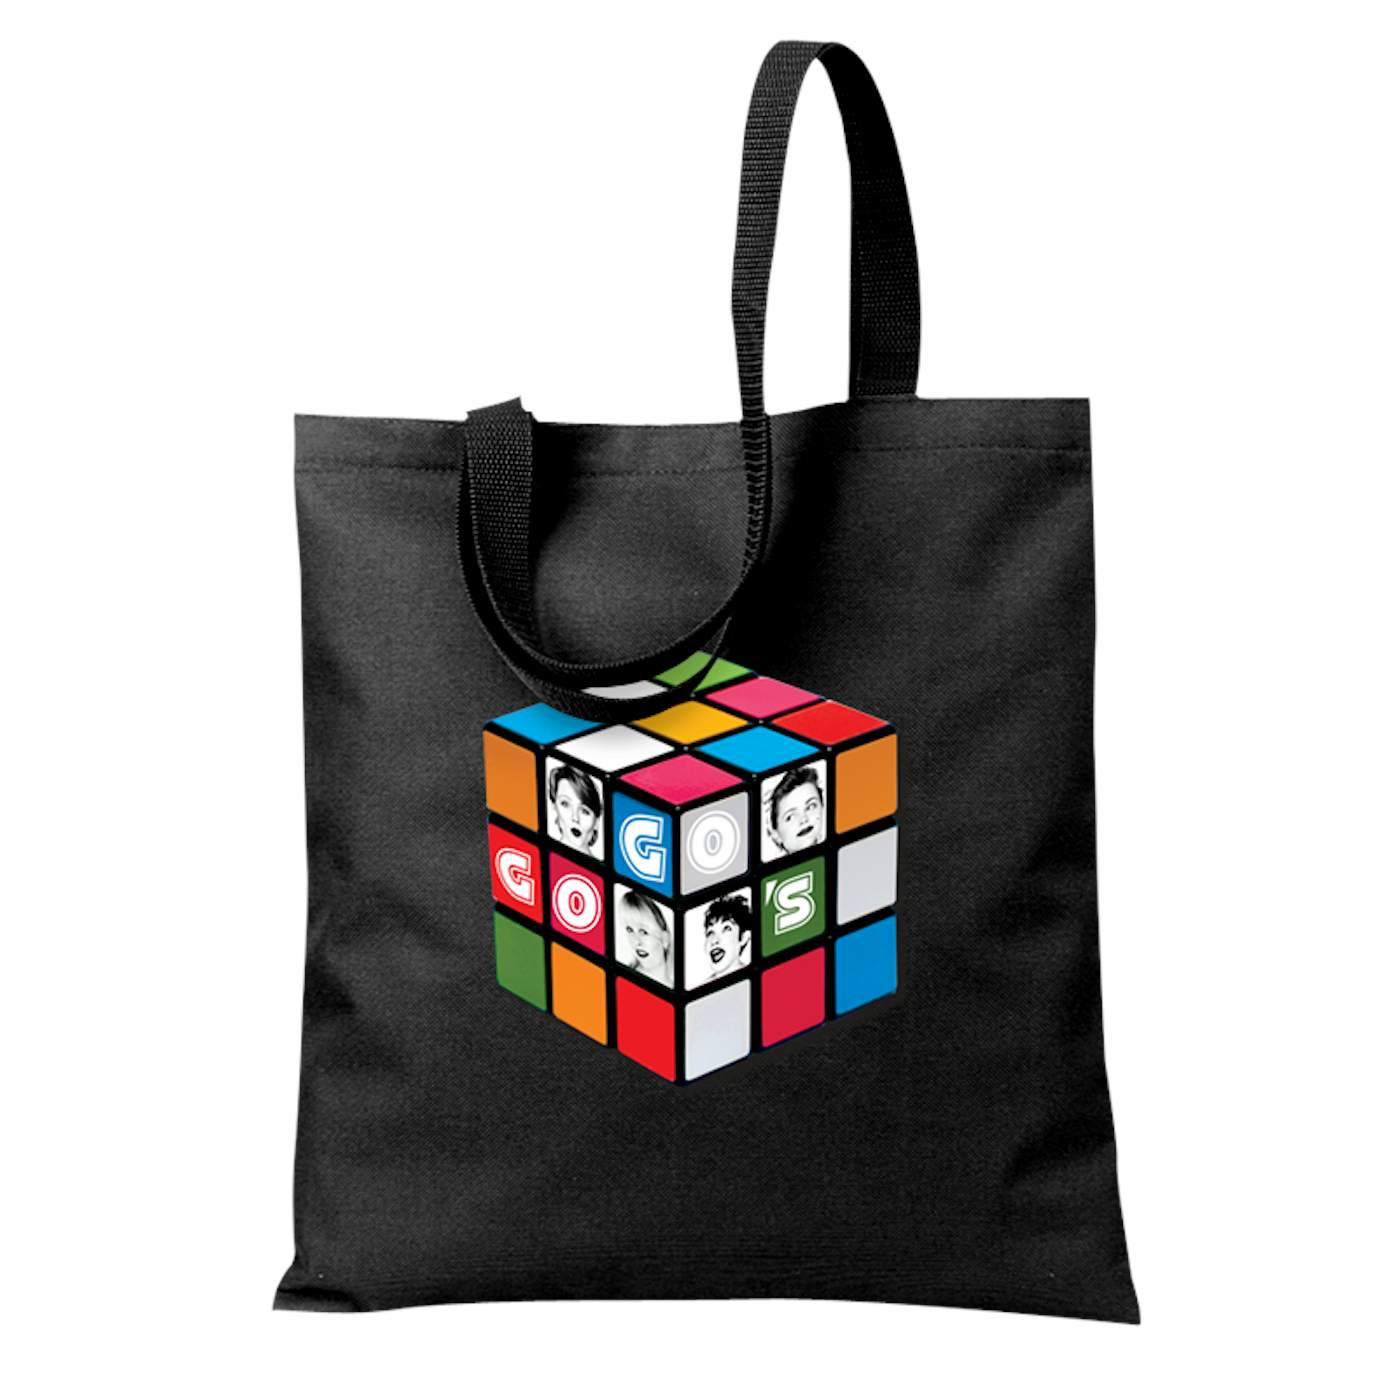 The Go-Go's Rubik Tote Bag